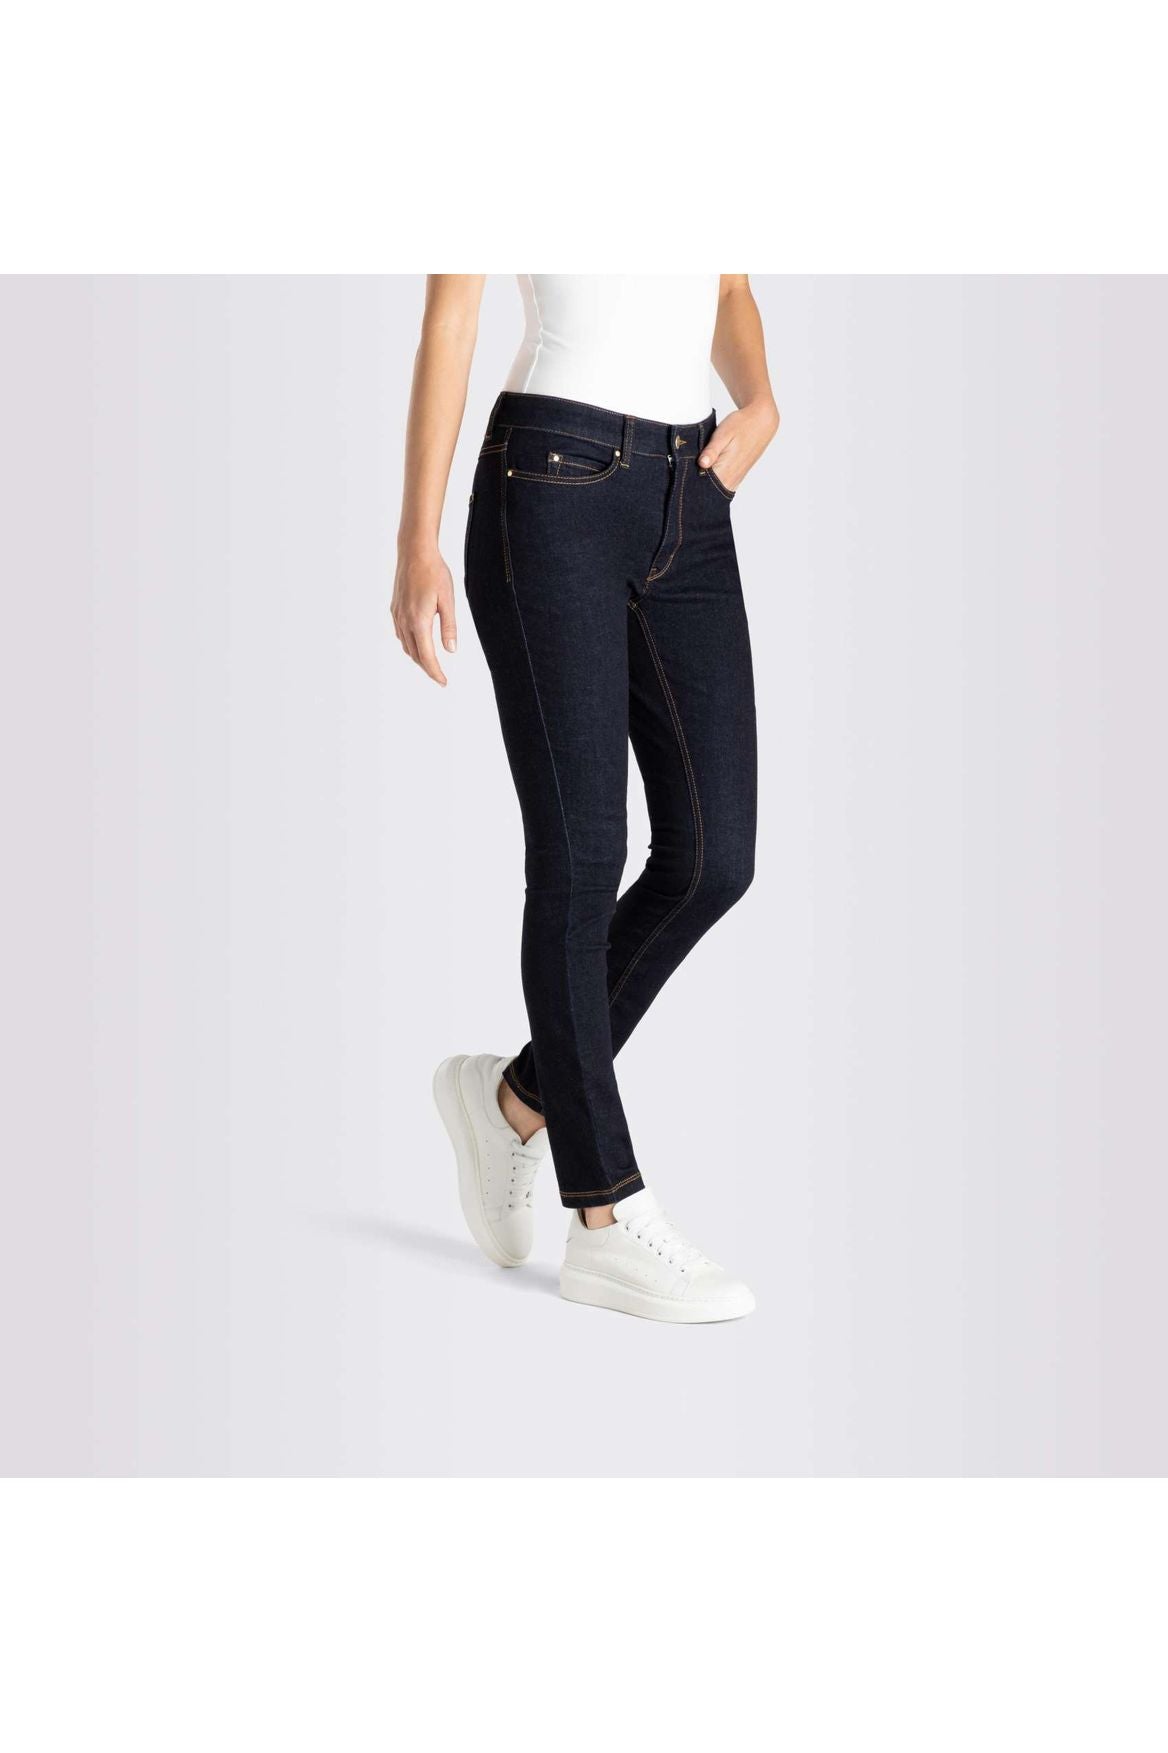 Jeans Robertson Skinny D683 Madison – Mac 2600-90-0356L Denim Ri Authentic Dream Fashion |